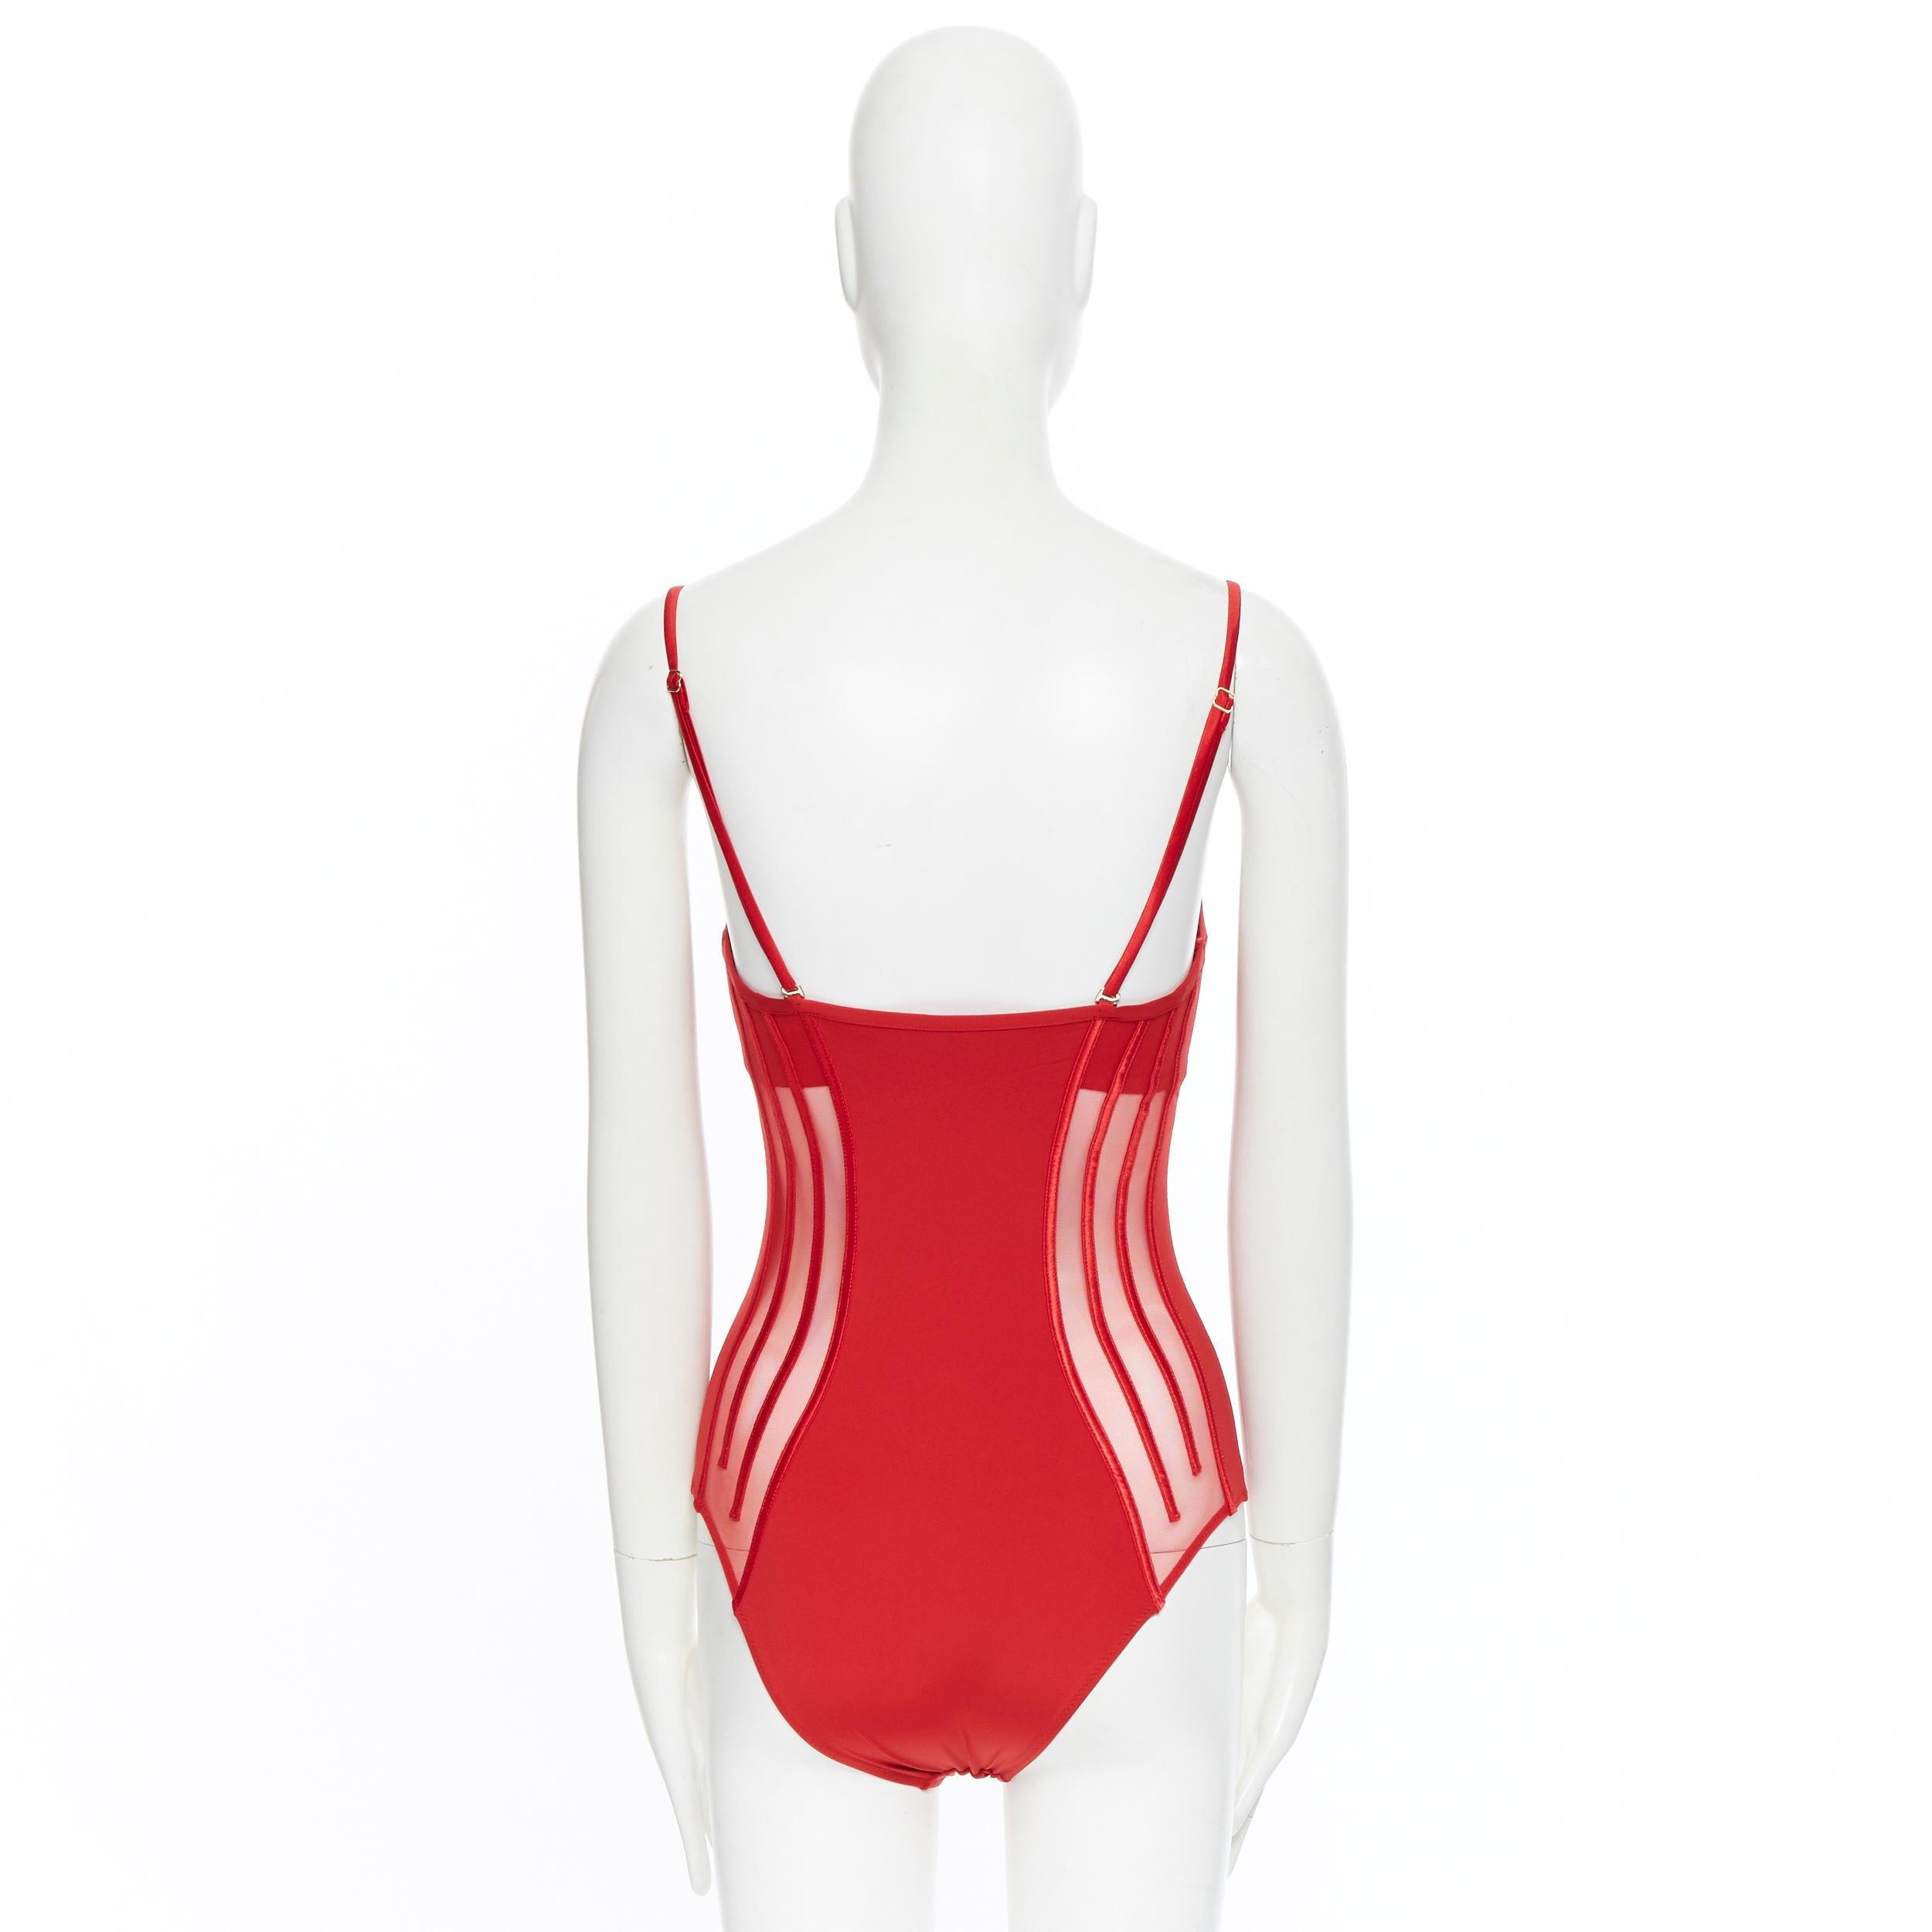 Women's new LA PERLA Graphique Couture red boned sheer body monokini swimsuit IT44B M